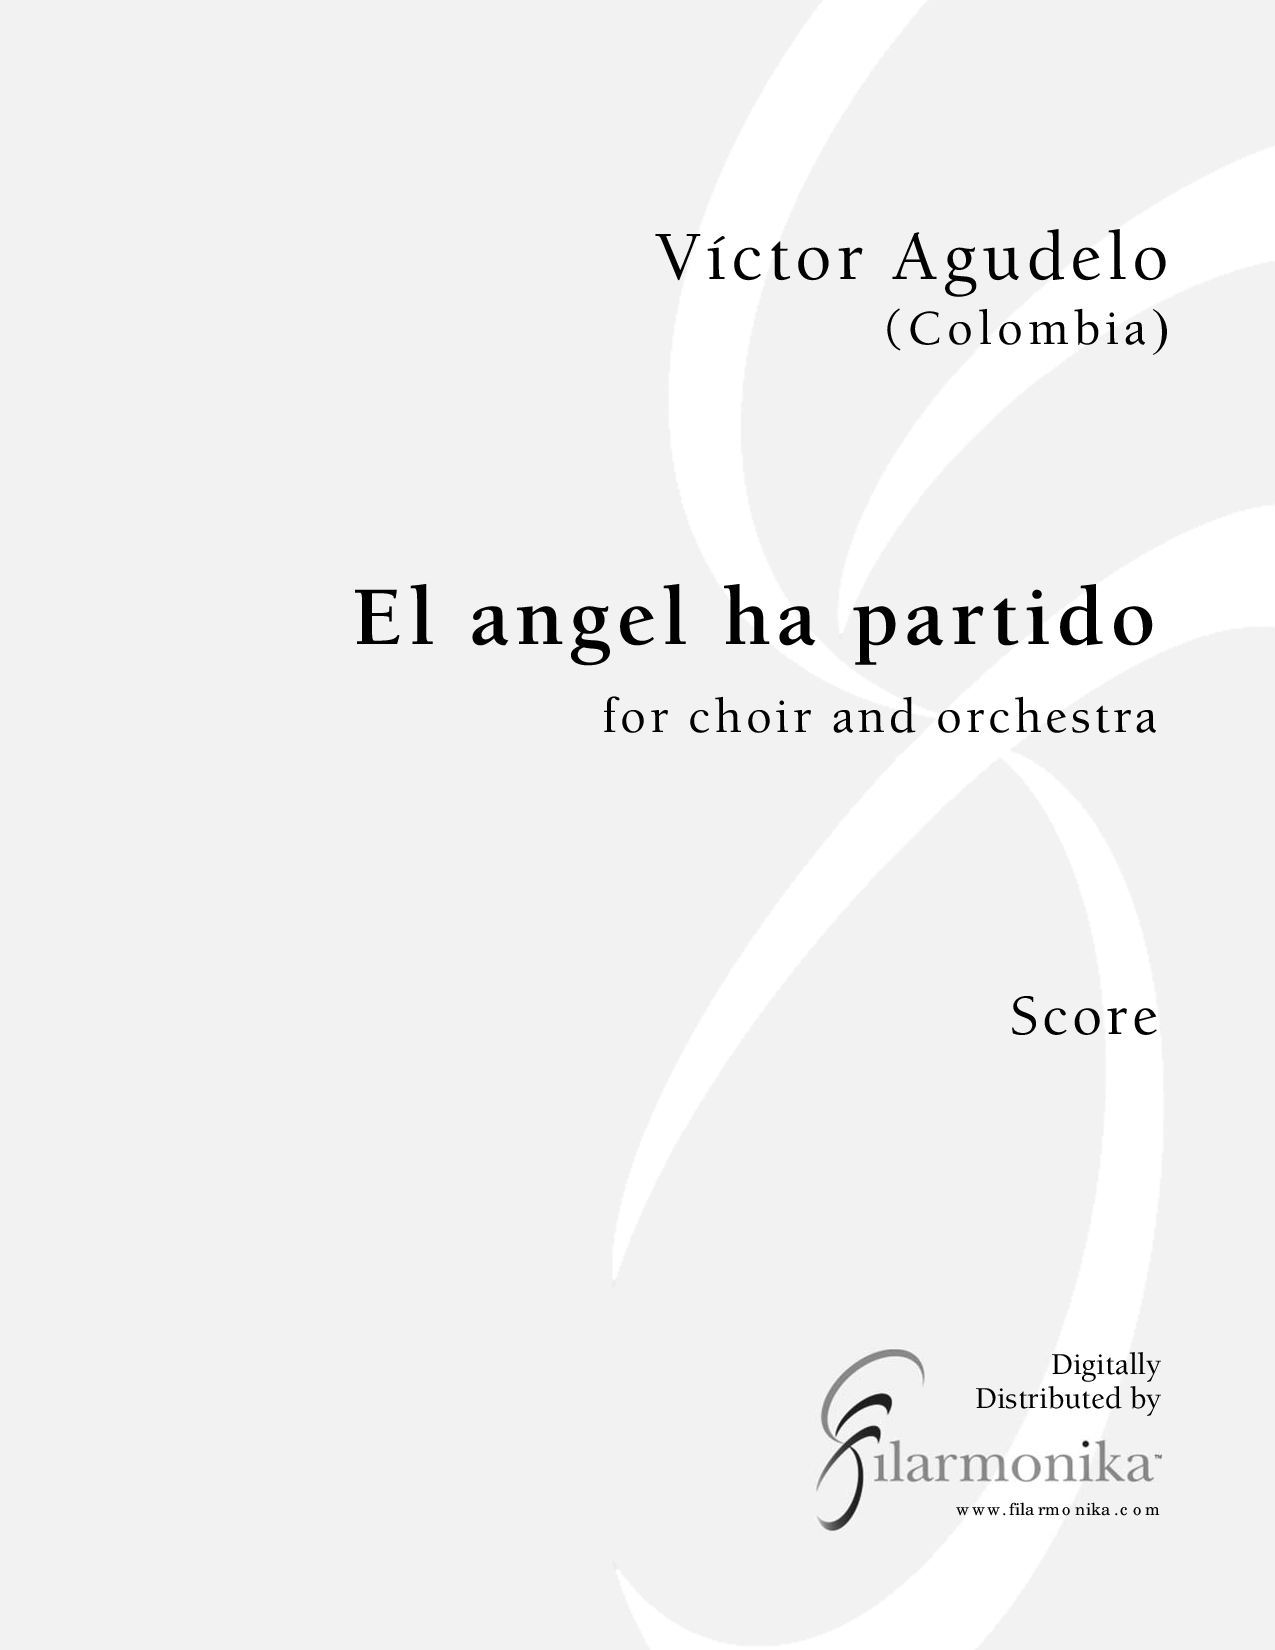 El ángel ha partido, for choir and orchestra